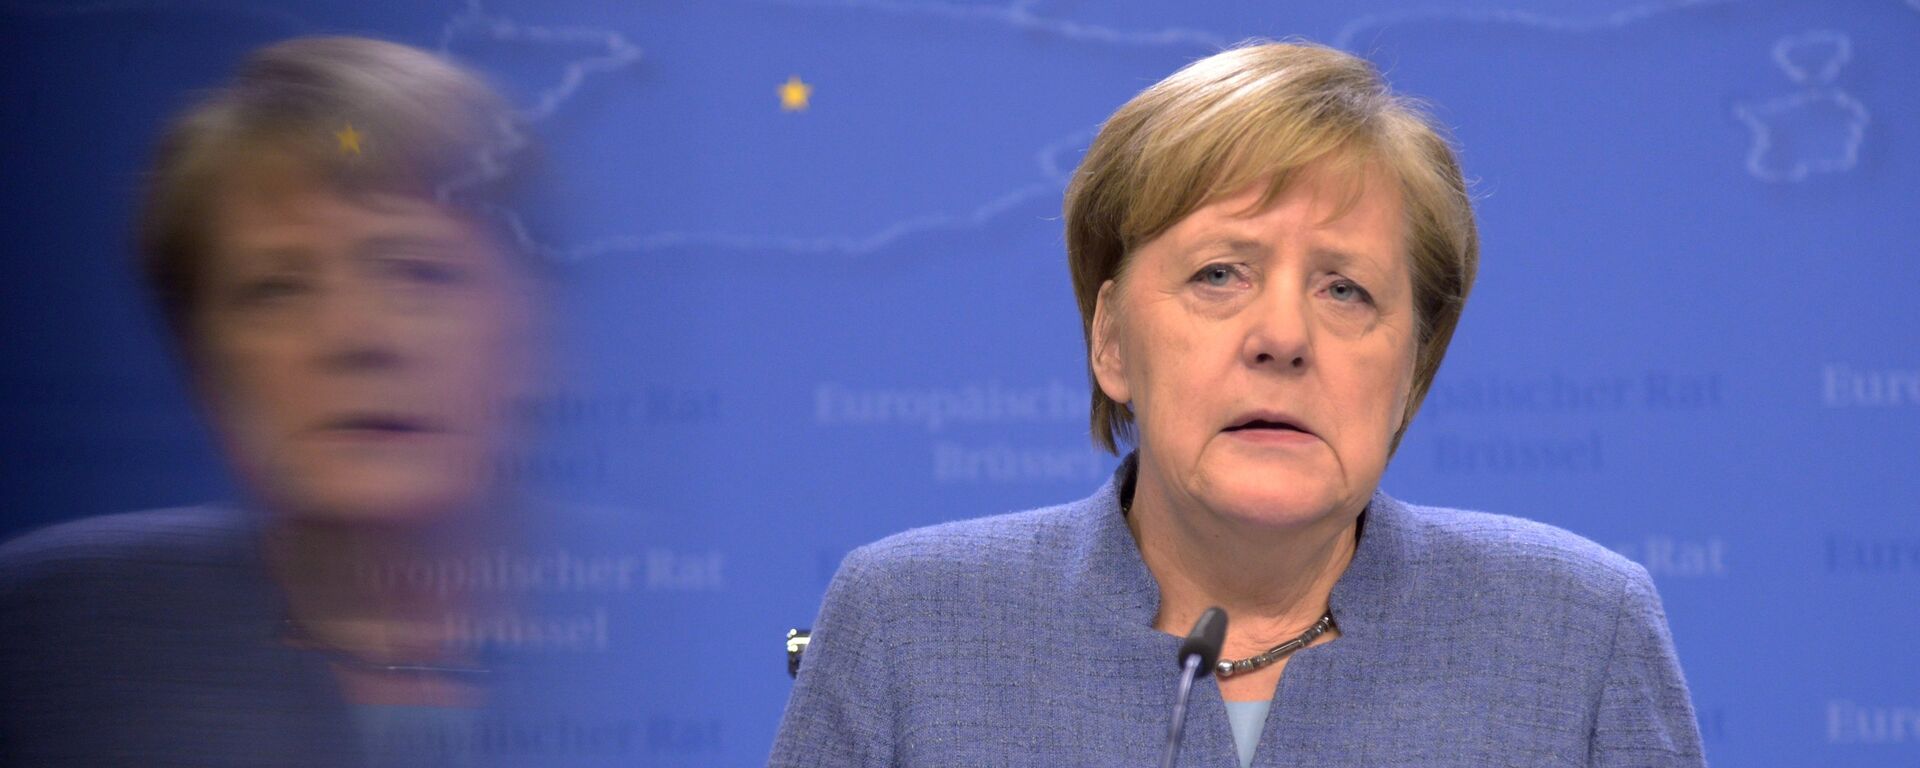 Angela Merkel, excanciller de Alemania - Sputnik Mundo, 1920, 13.12.2020